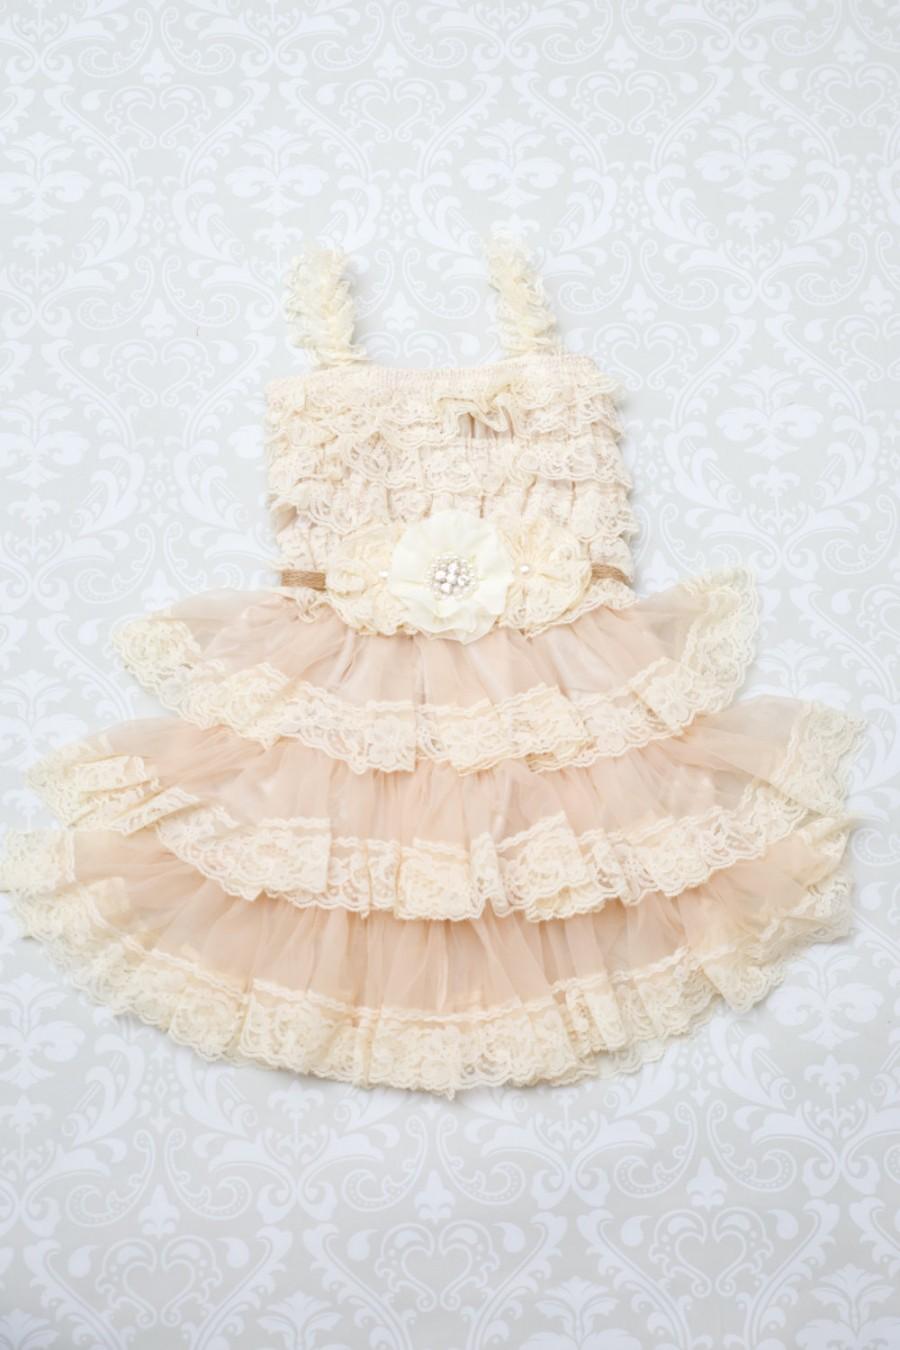 زفاف - Ivory Flower Girl Dress/Shabby Chic Flower Girl /Wheat Cream Flower Girl/Country Wedding-lvory-Champagne Flower Girl Dress-Shabby Chic Dress